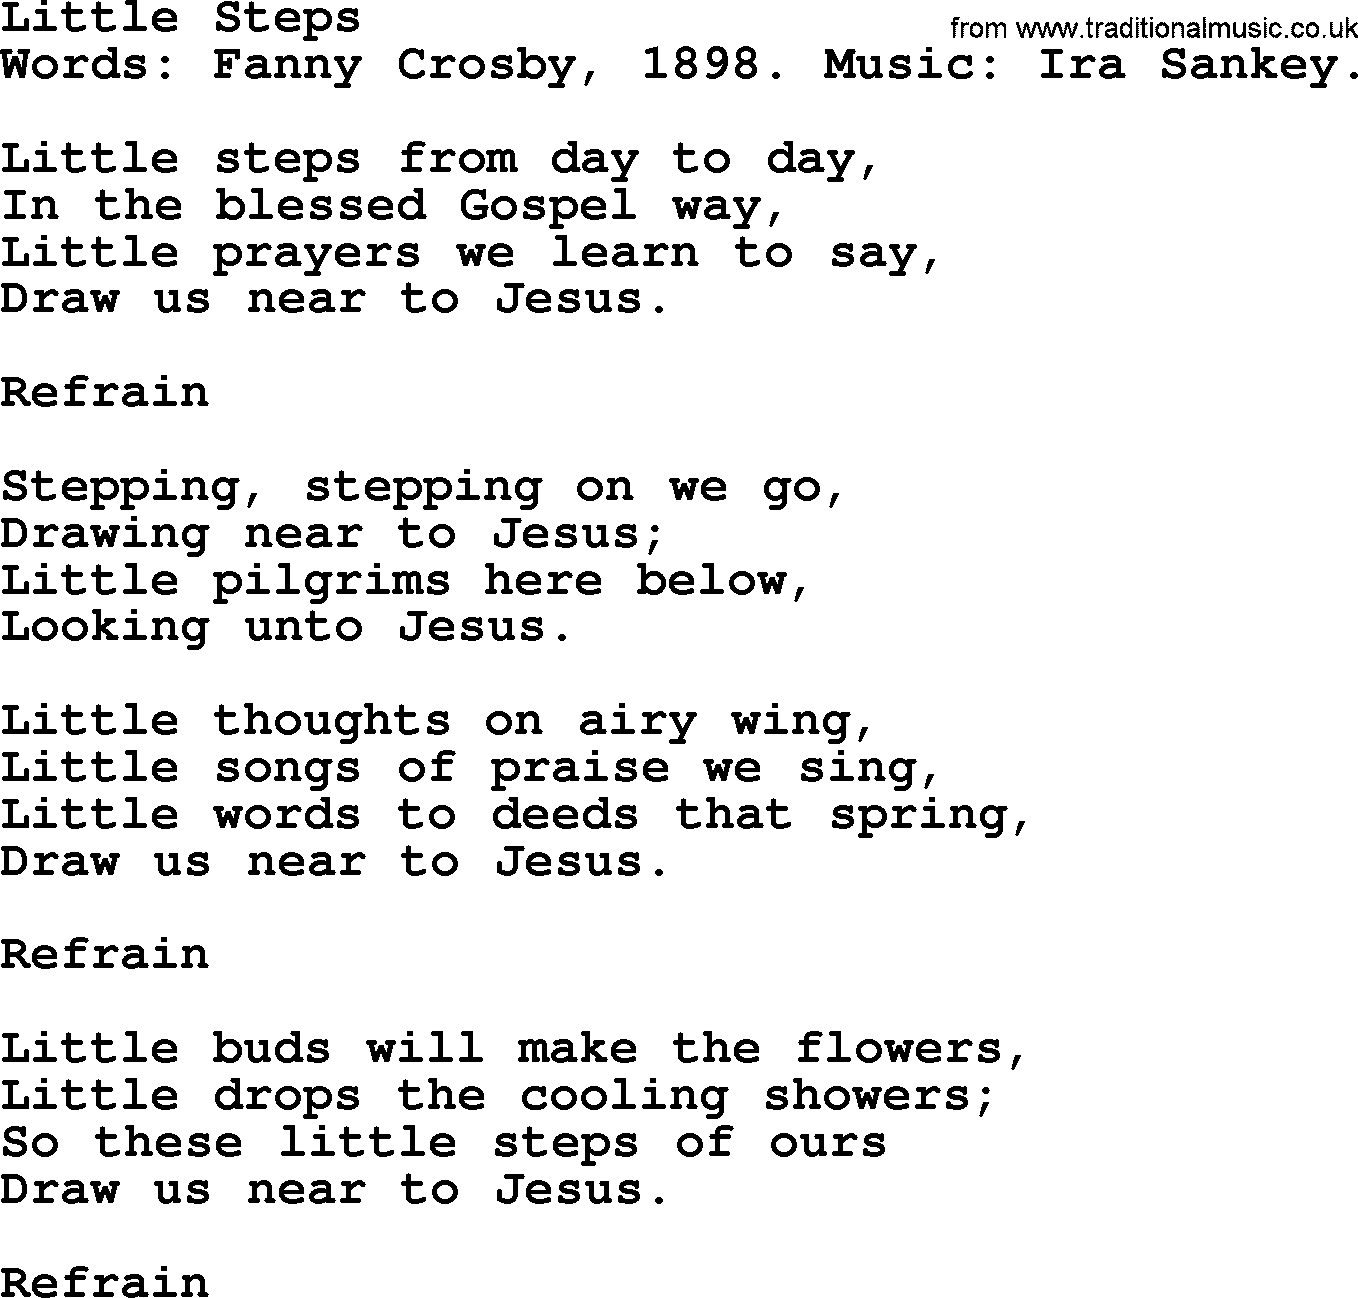 Fanny Crosby song: Little Steps, lyrics